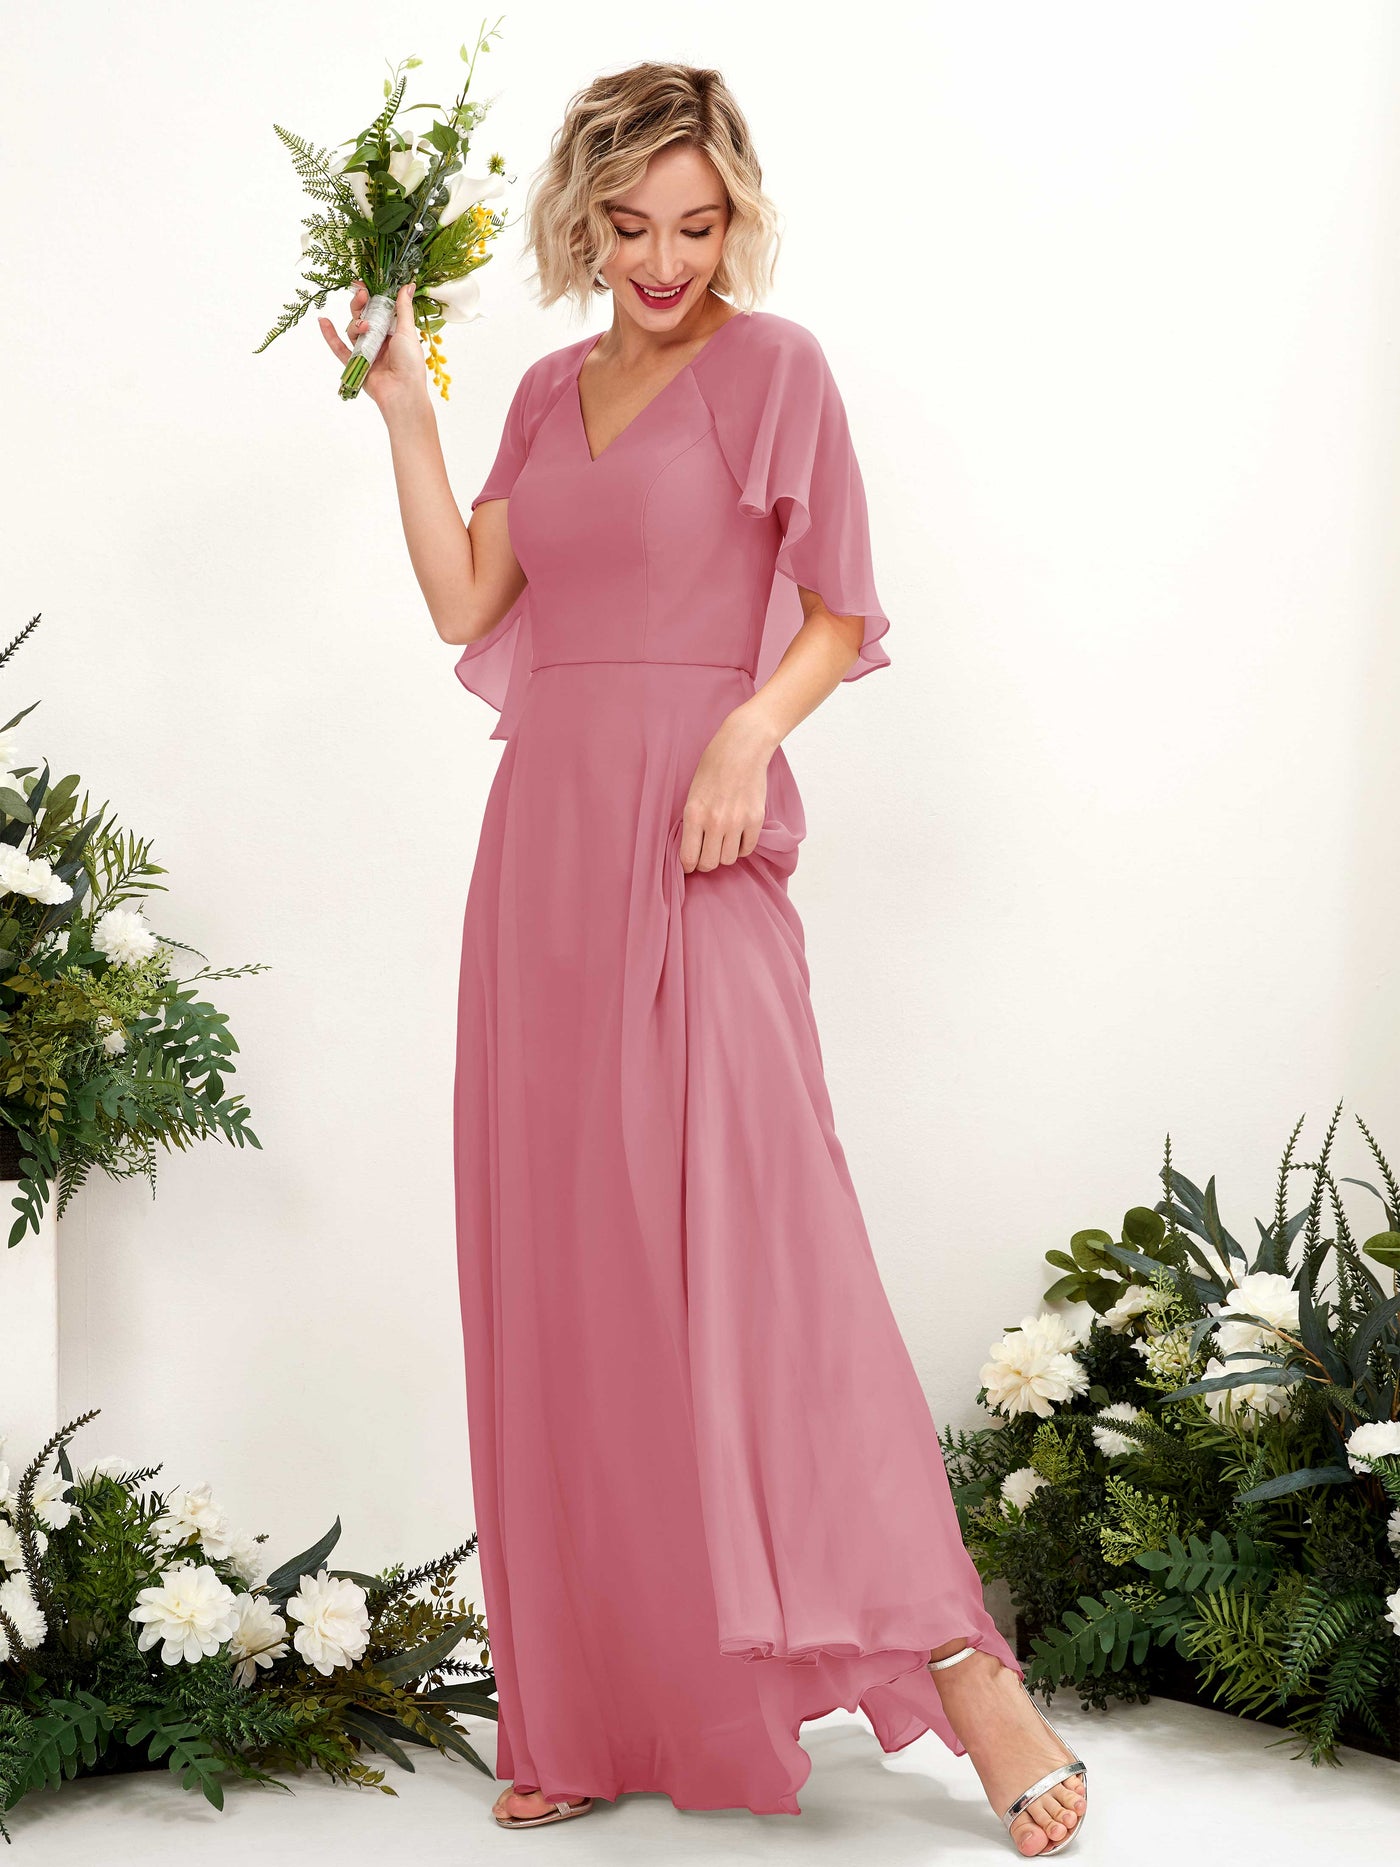 Desert Rose Bridesmaid Dresses Bridesmaid Dress A-line Chiffon V-neck Full Length Short Sleeves Wedding Party Dress (81224411)#color_desert-rose